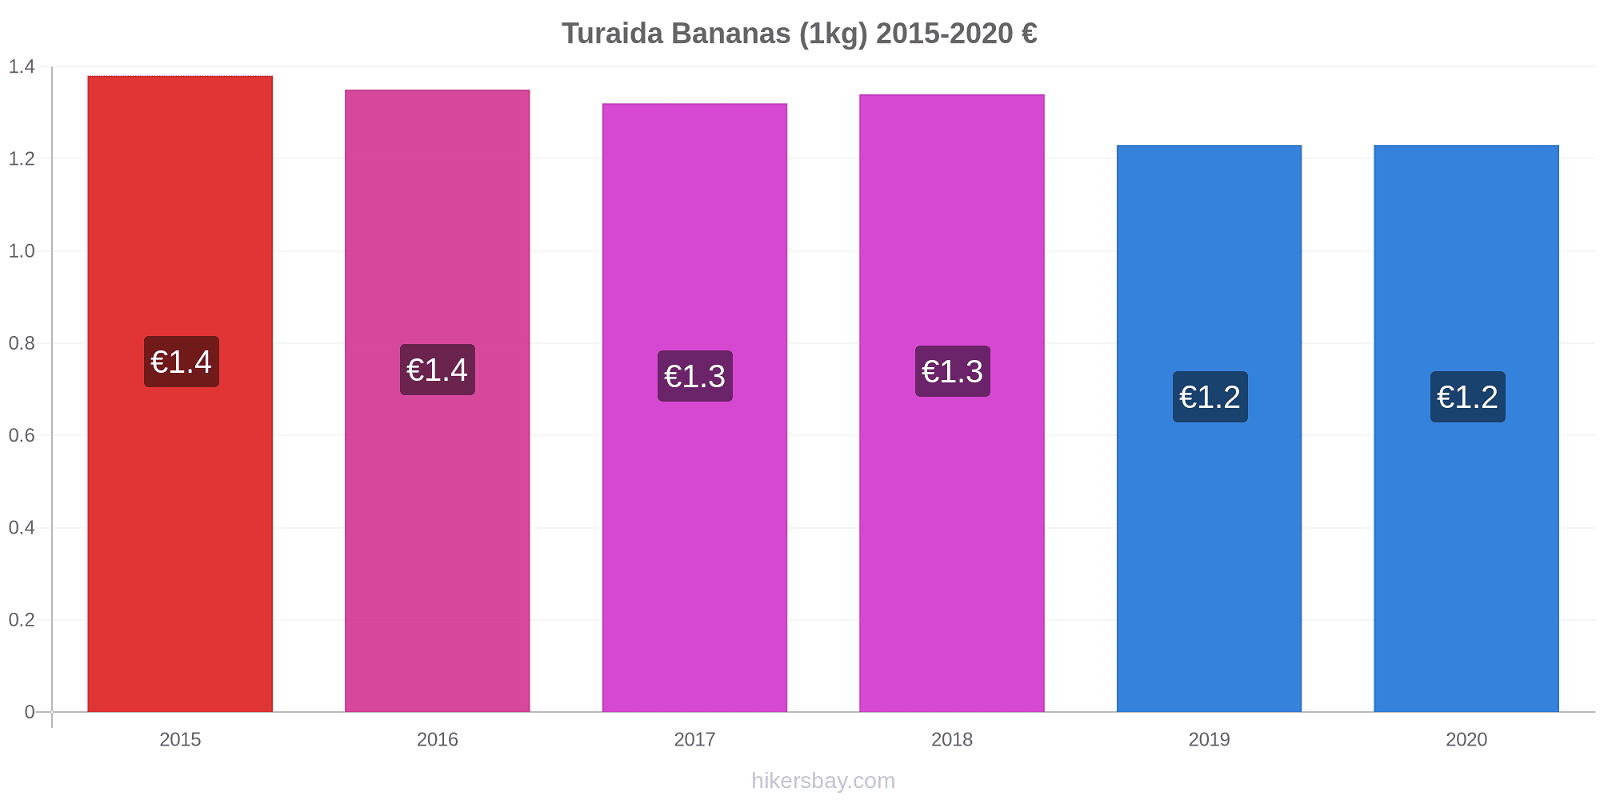 Turaida price changes Bananas (1kg) hikersbay.com